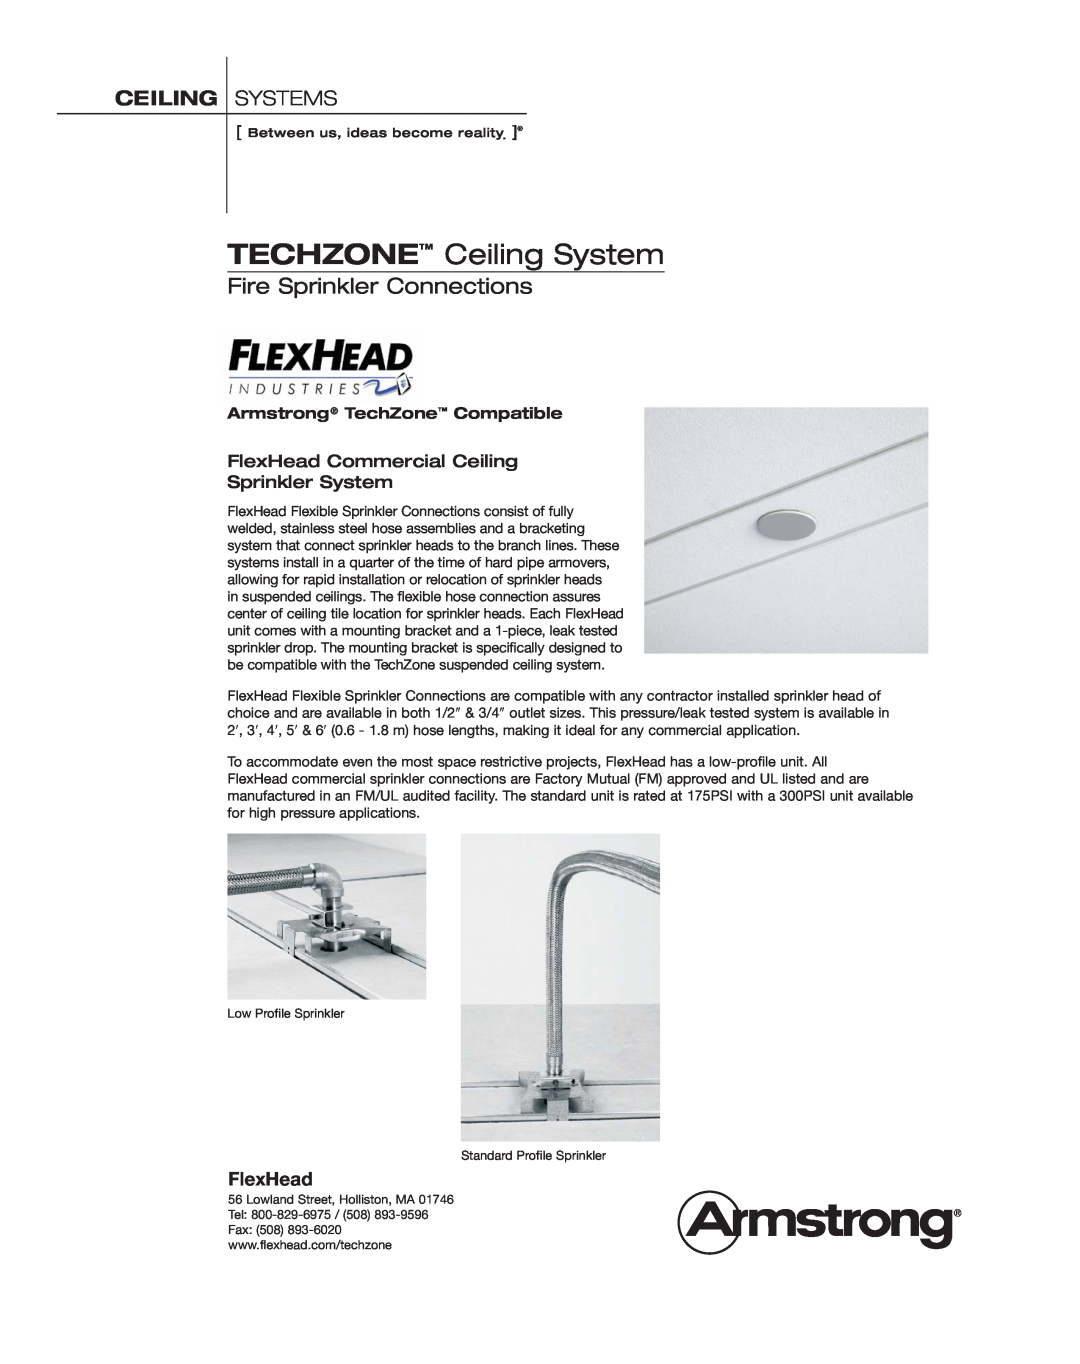 Lightolier Standard Profile Sprinkler manual Ceiling Systems, FlexHead Commercial Ceiling Sprinkler System 